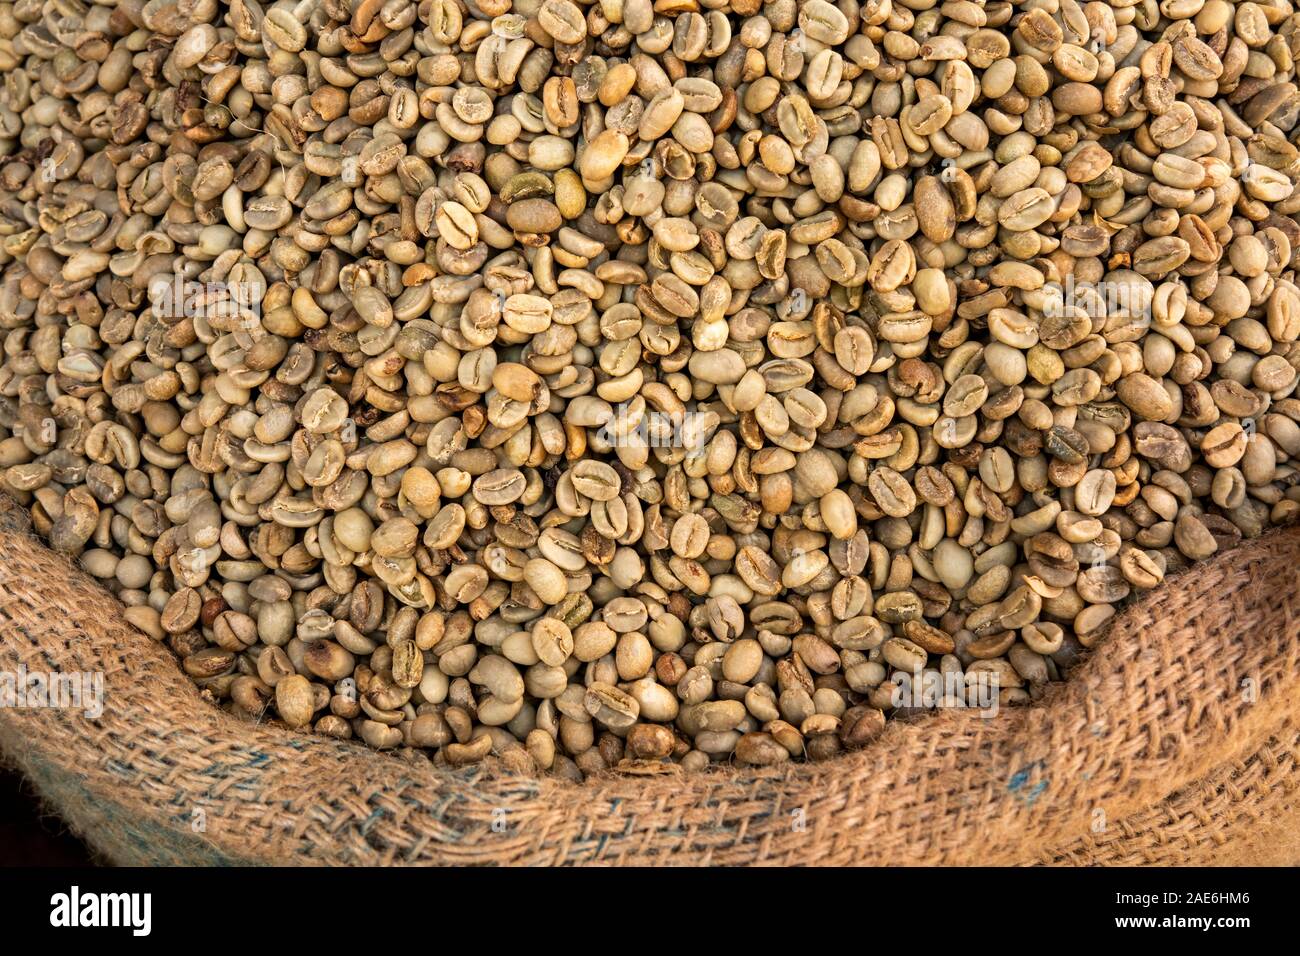 Eth549Ethiopia, Amhara Region, Gondar, Arada Market, sack of raw coffee beans Stock Photo